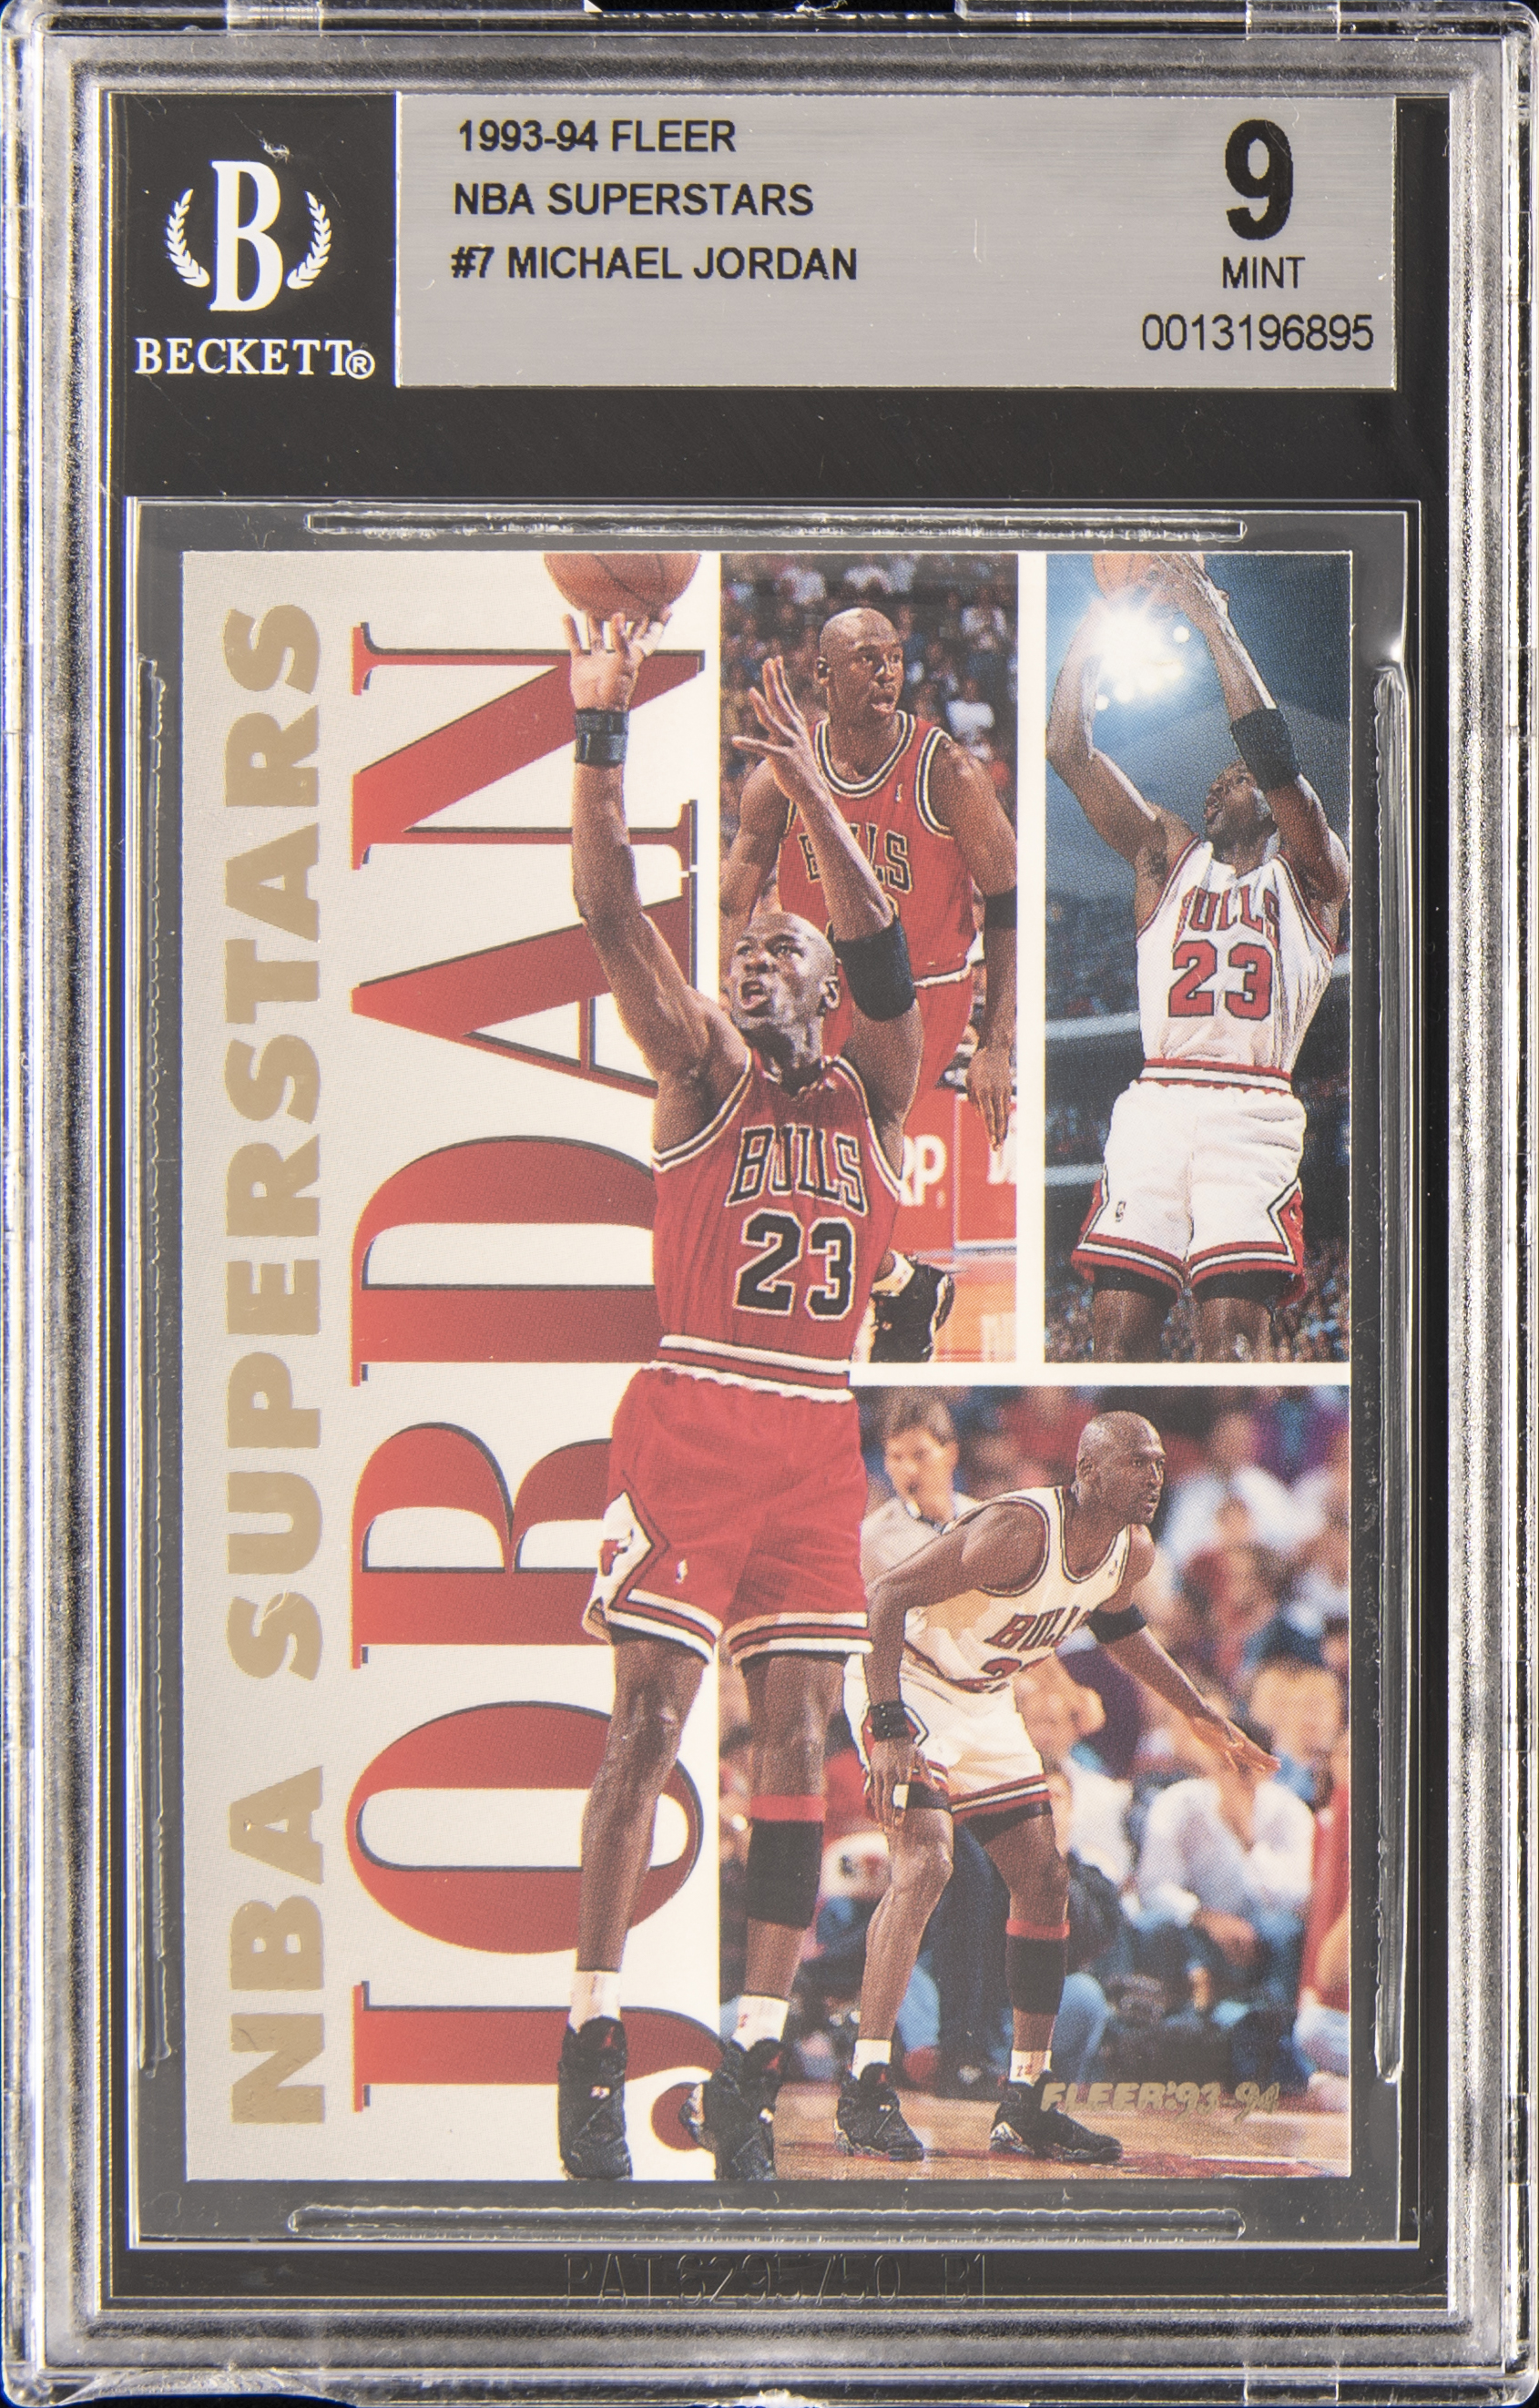 1993-94 Fleer NBA Superstars #7 Michael Jordan - BGS MINT 9